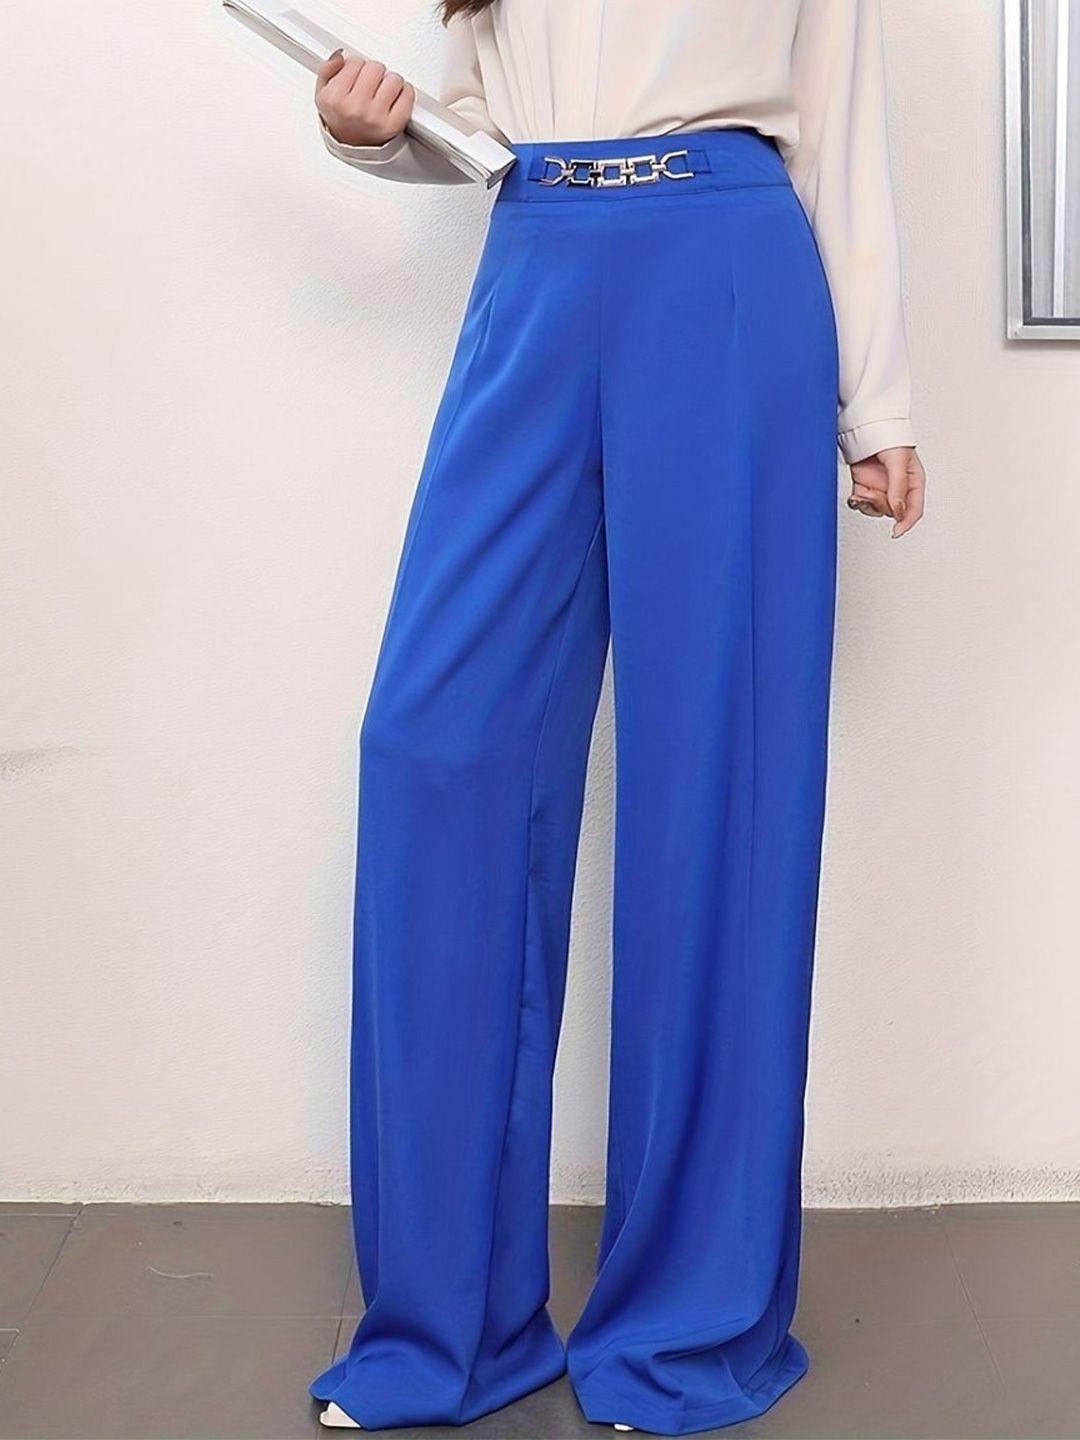 stylecast women blue flared trousers